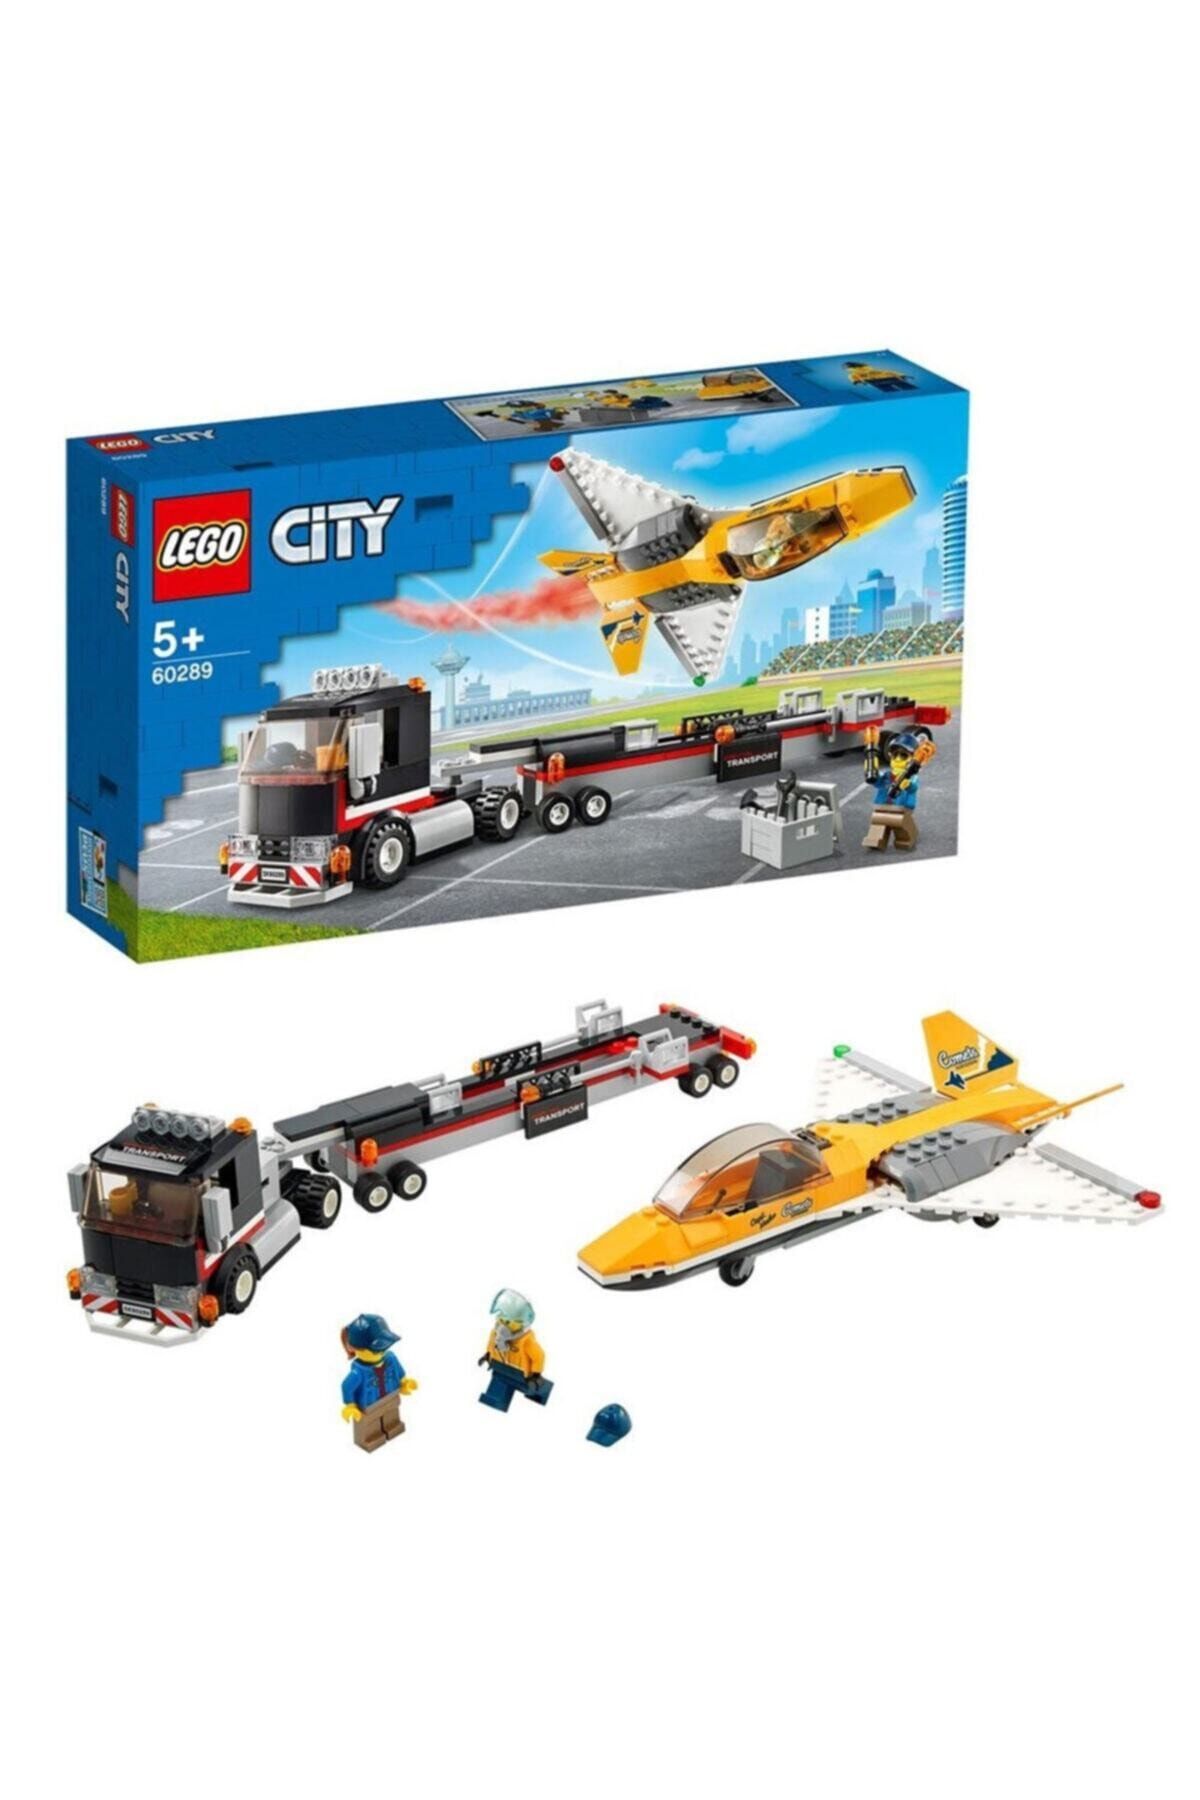 LEGO -60289 Jet Transporter